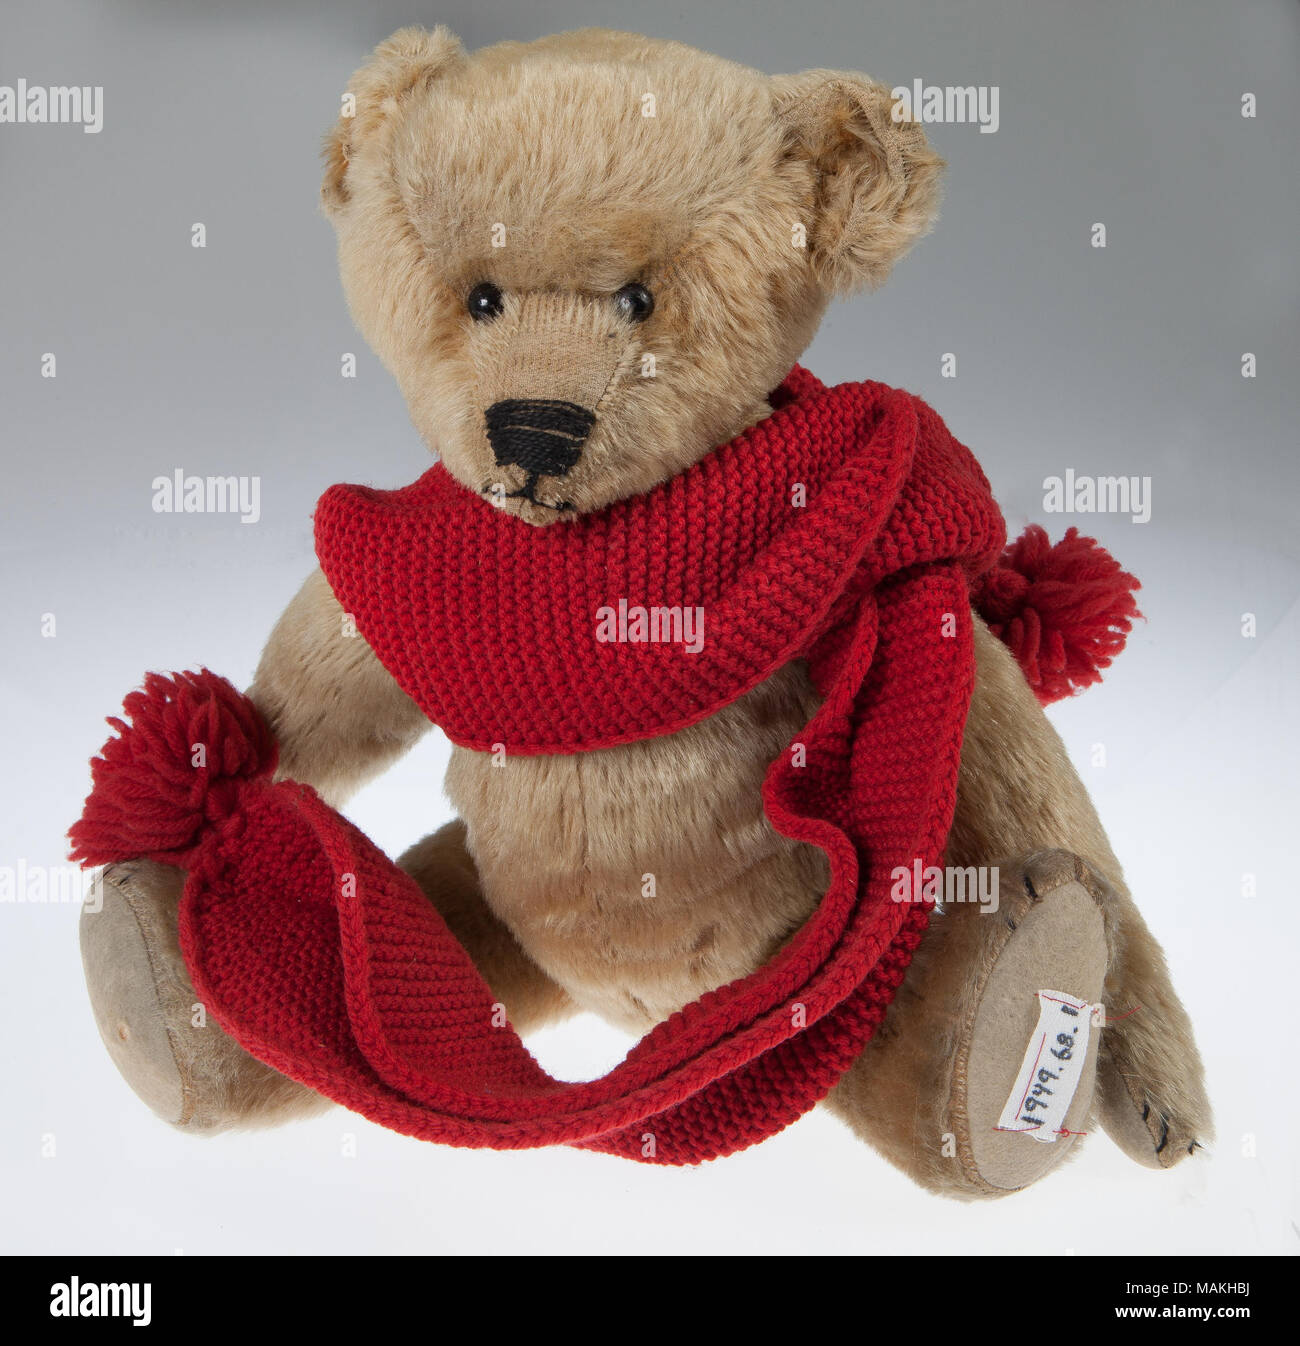 Sold at Auction: Steiff Louis teddy bear, Club Edition 2012